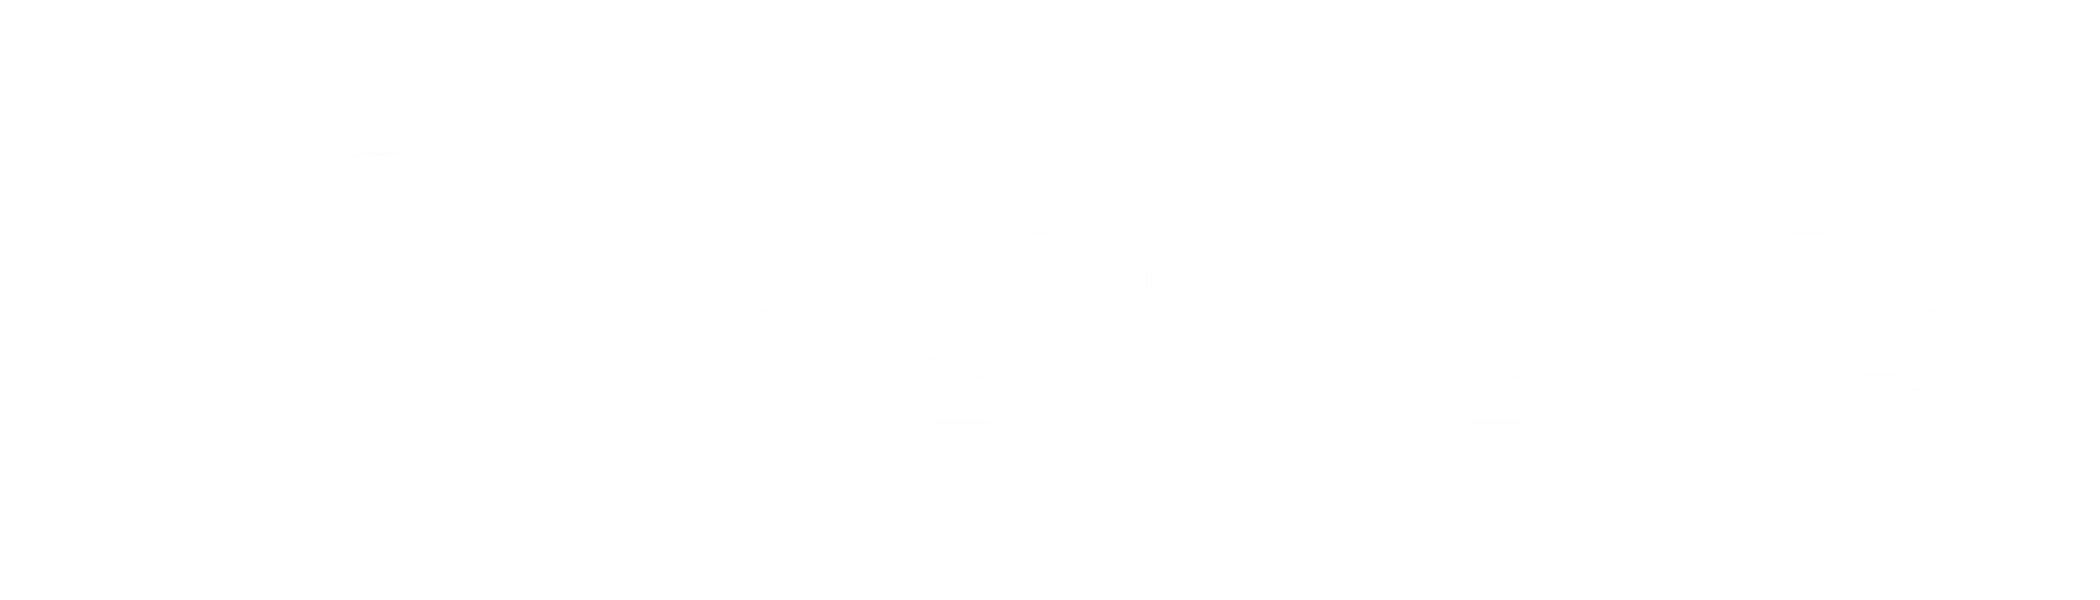 SEO WEB Technology